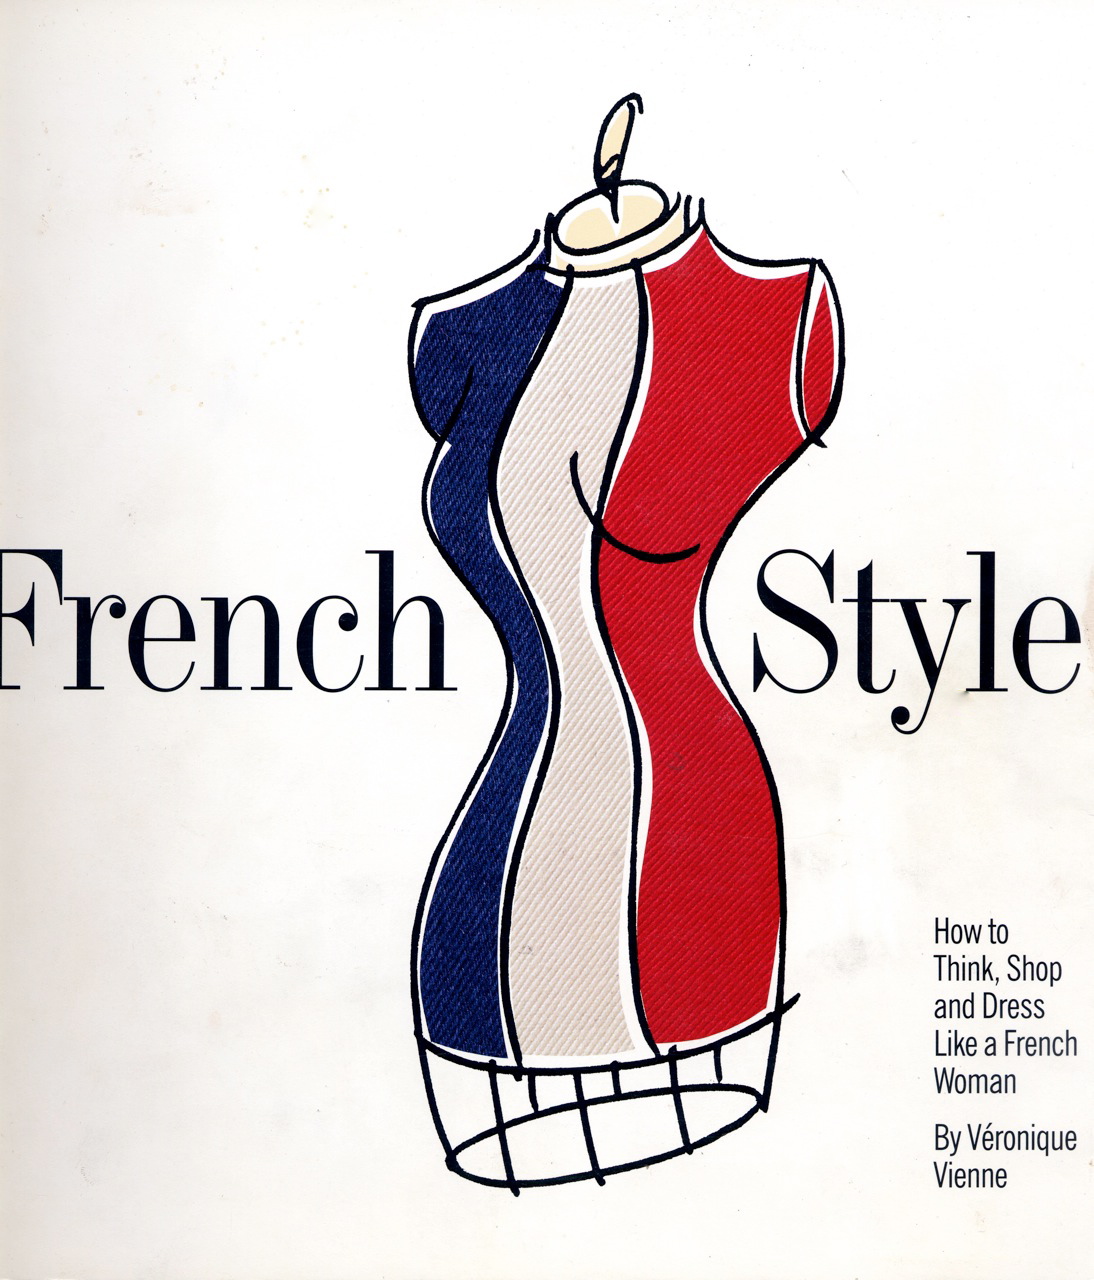 Think my shop. Платье пуговицами на французском стиле. Французский стиль книги. Veronique эмблема. French woman Dress.